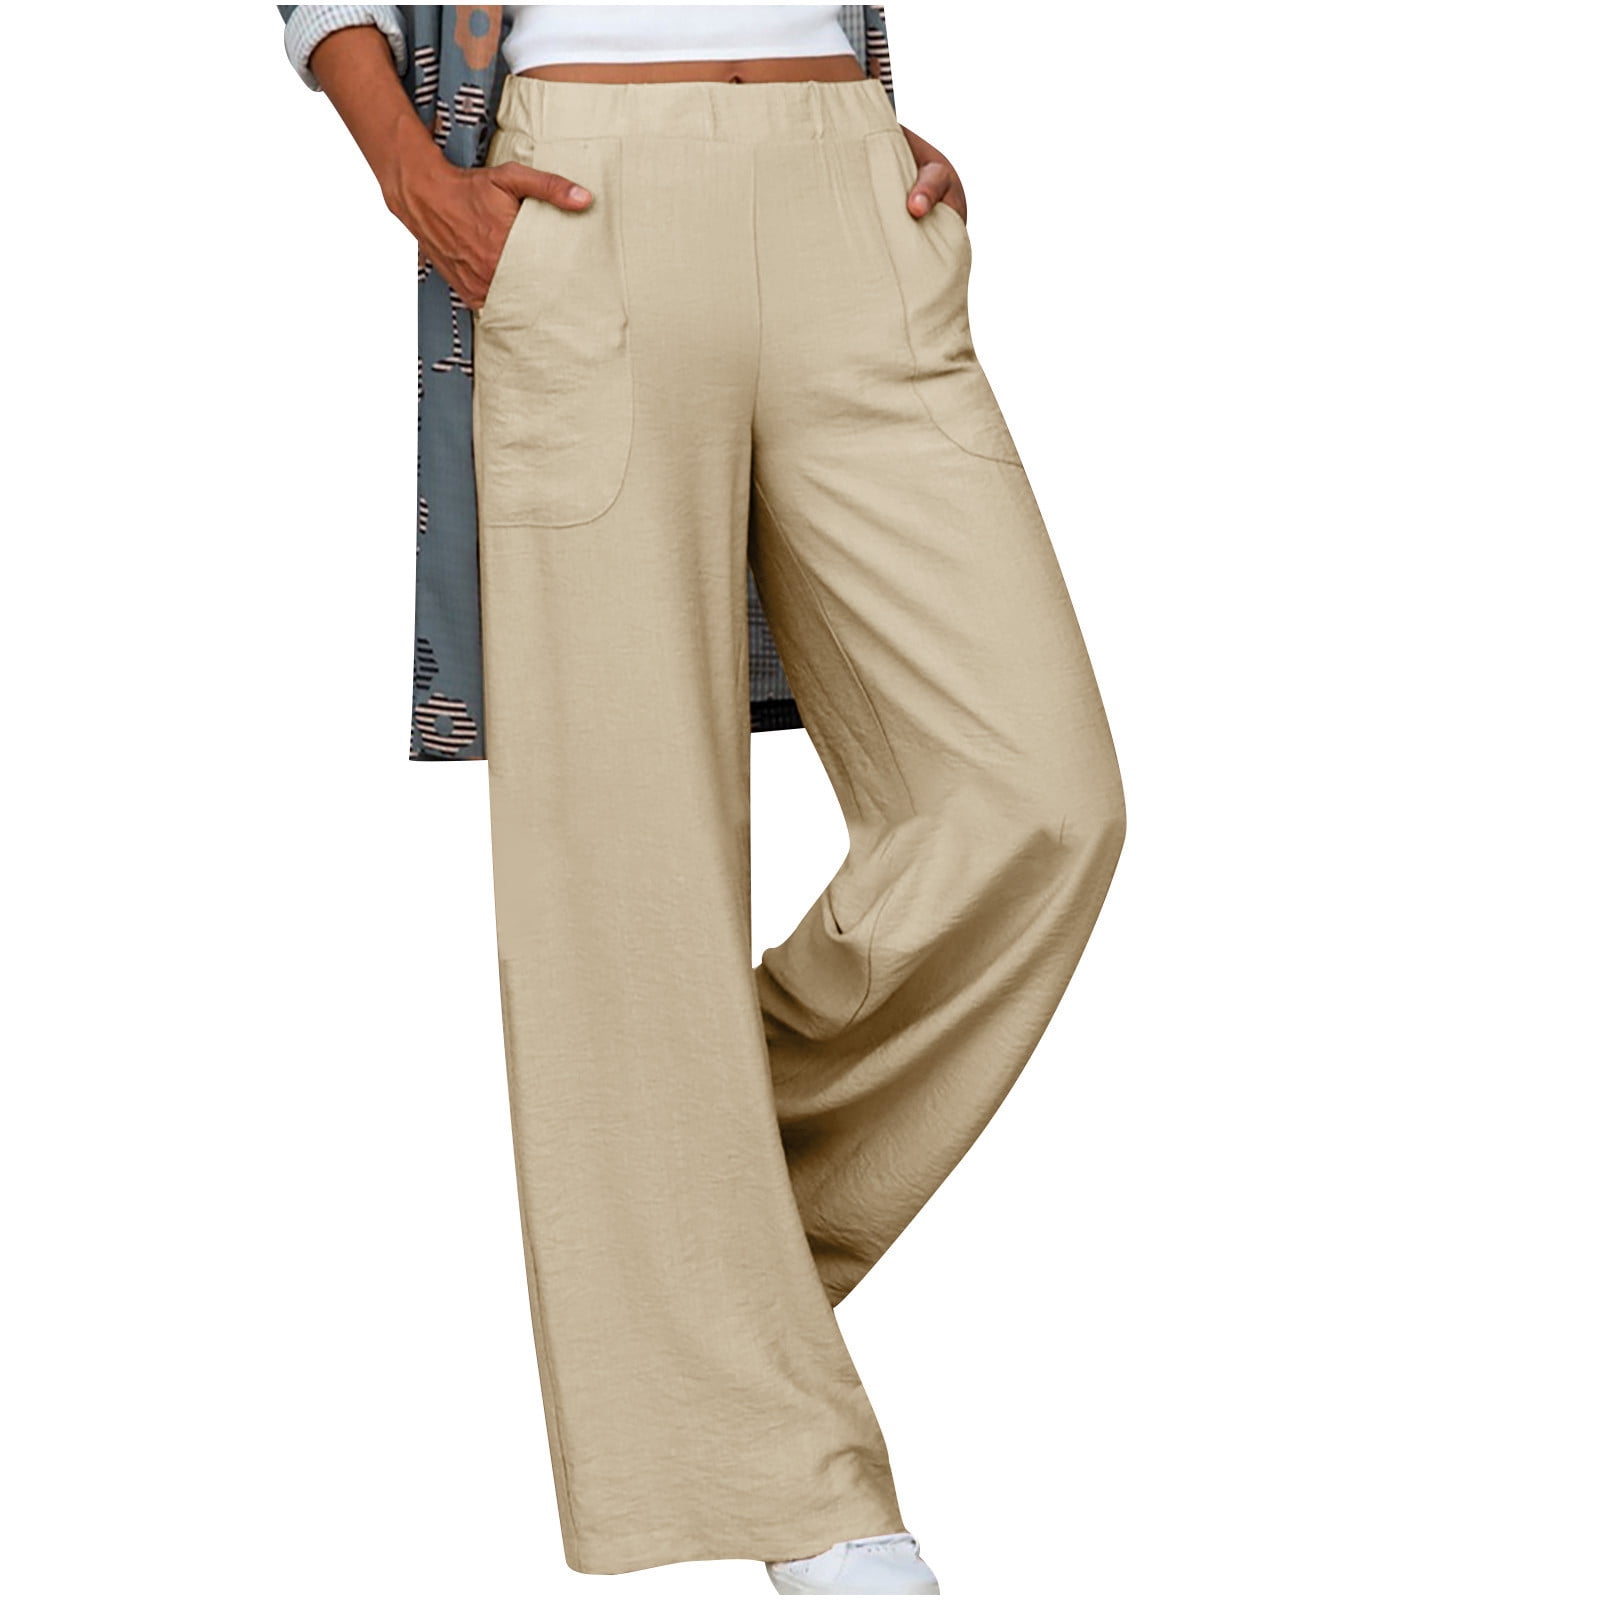 BYOIMUD Women's Long Lounge Pants Savings Cotton and Linen